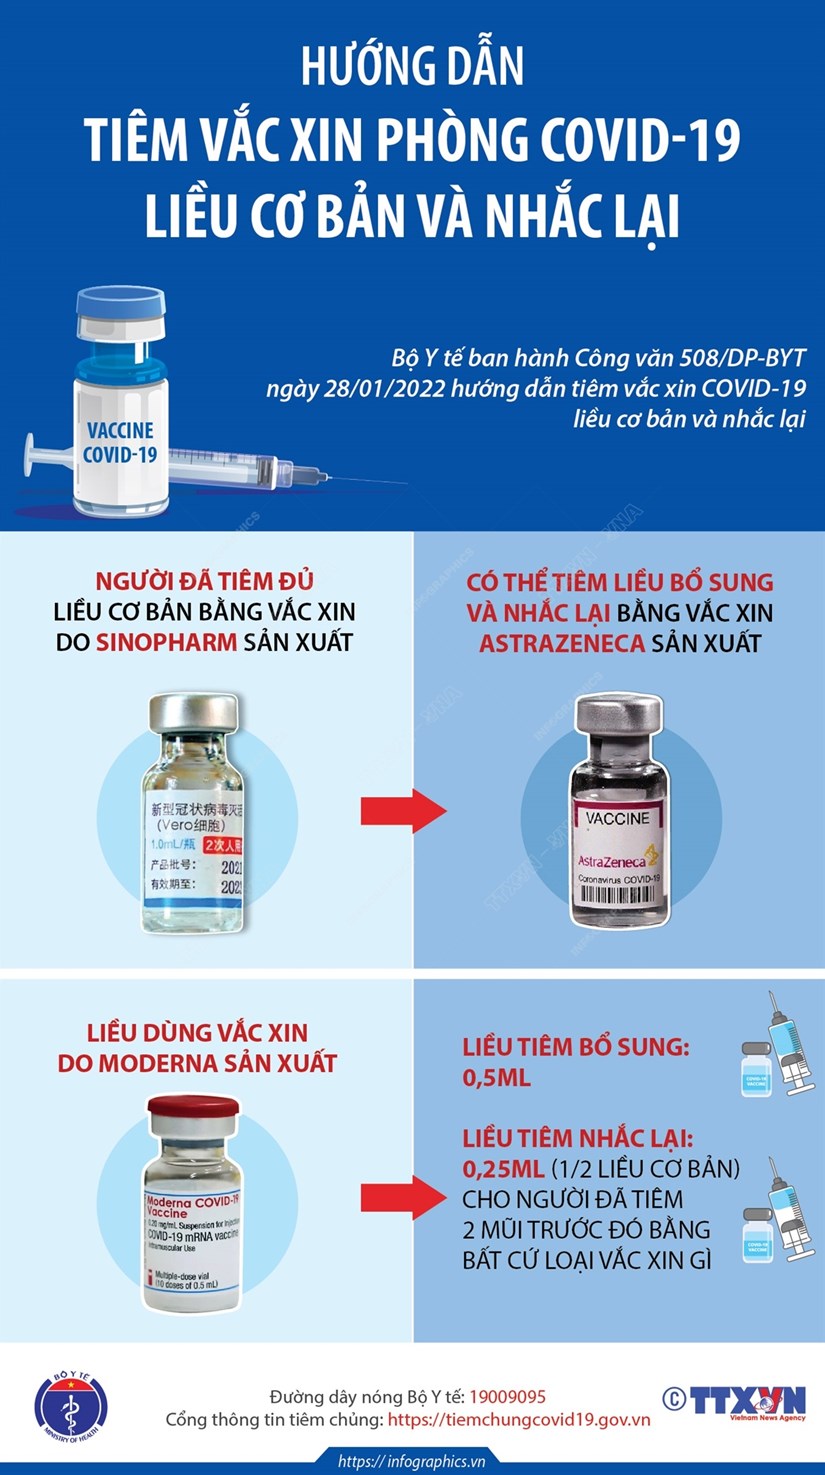 [Infographics] Huong dan tiem vaccine COVID-19 lieu co ban va nhac lai hinh anh 1